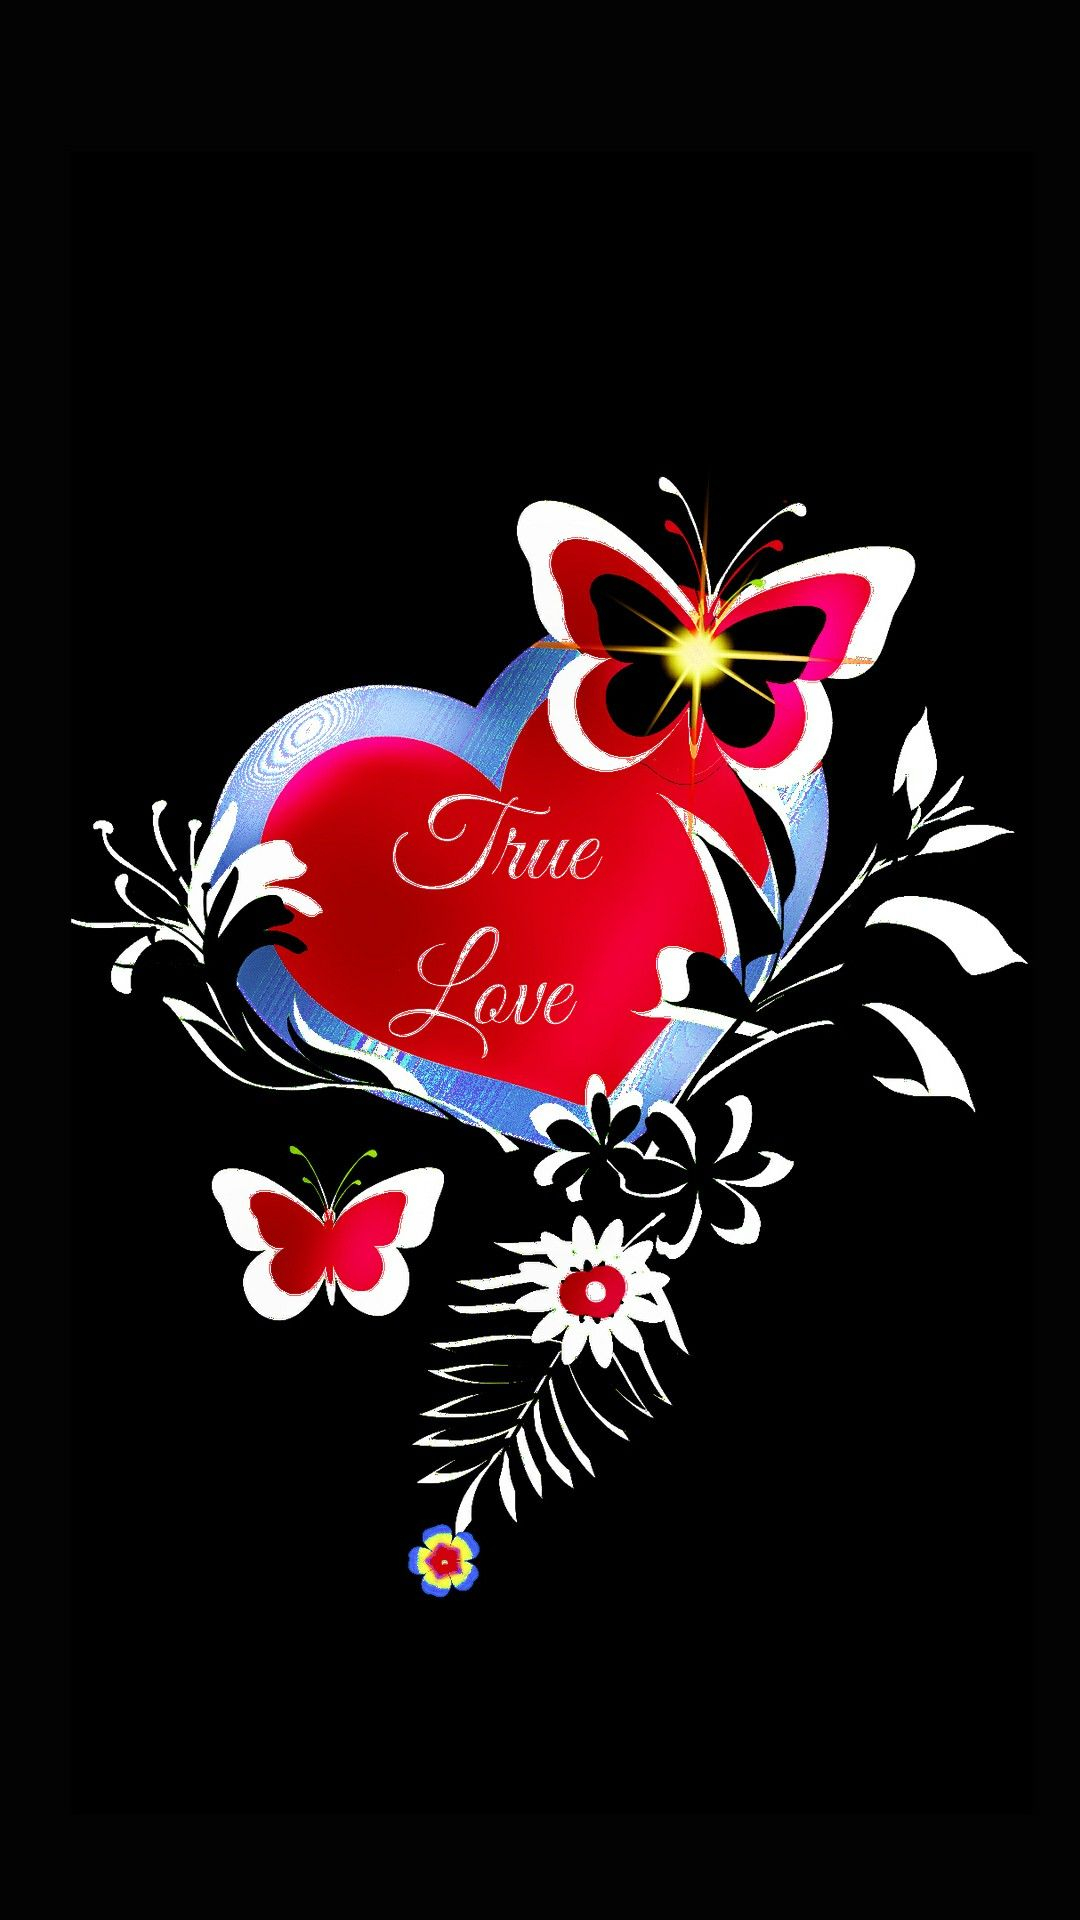 1080x1920 True love | Heart wallpaper, Valentines wallpaper, Iphone wallpaper